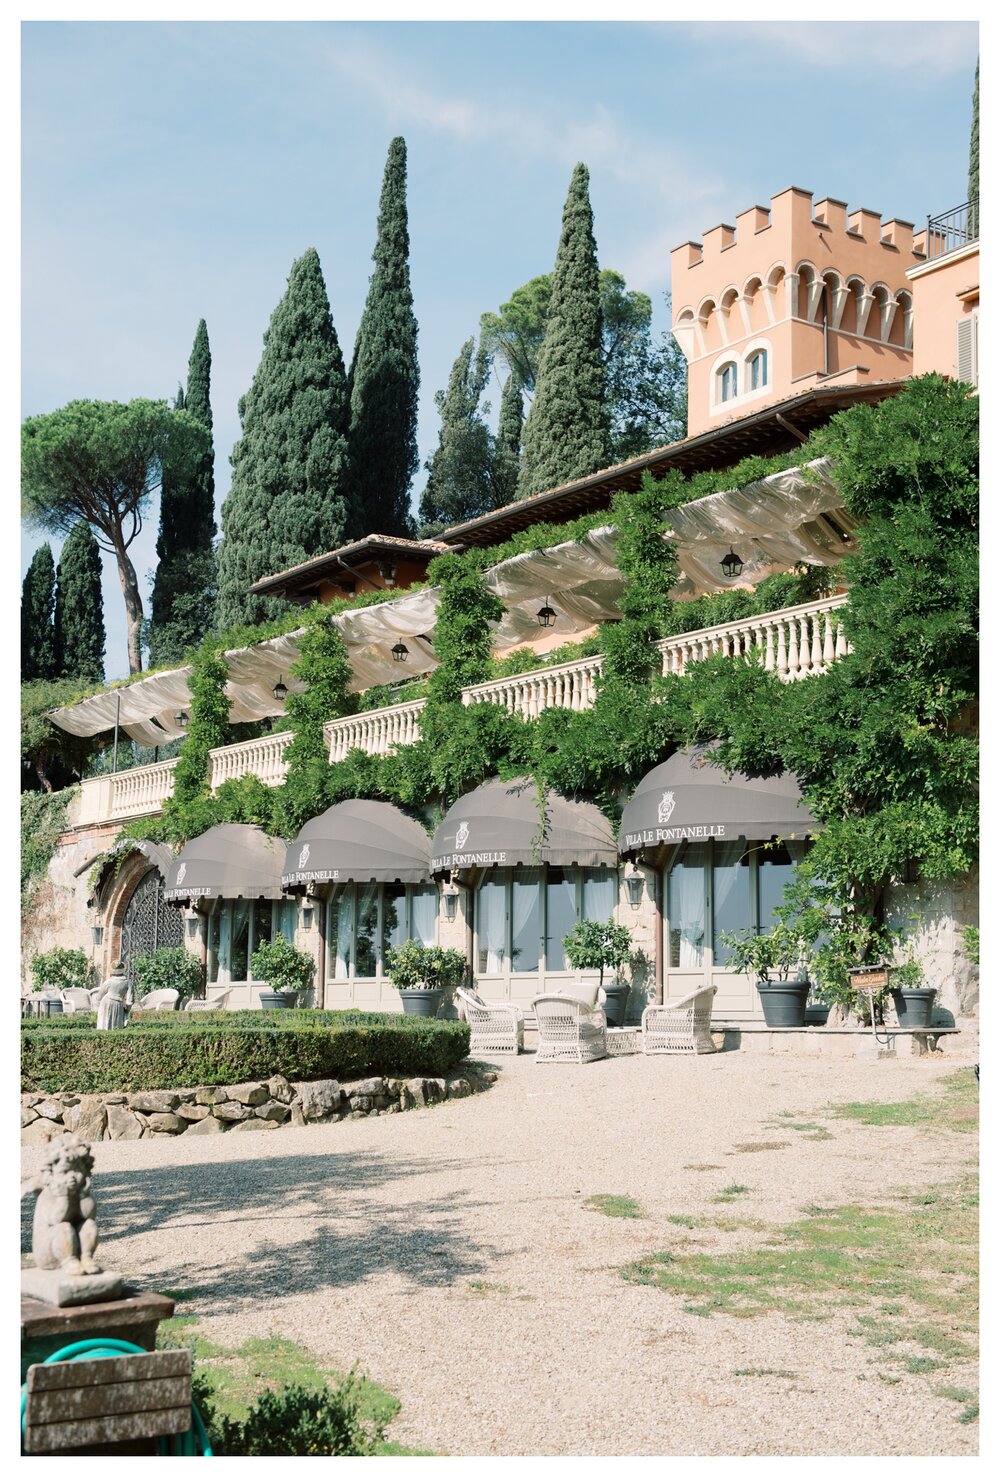  villa le fontantelle florence italy, florence wedding venues, tuscany wedding venue villas, italy wedding venues, italy wedding venues tuscany,  